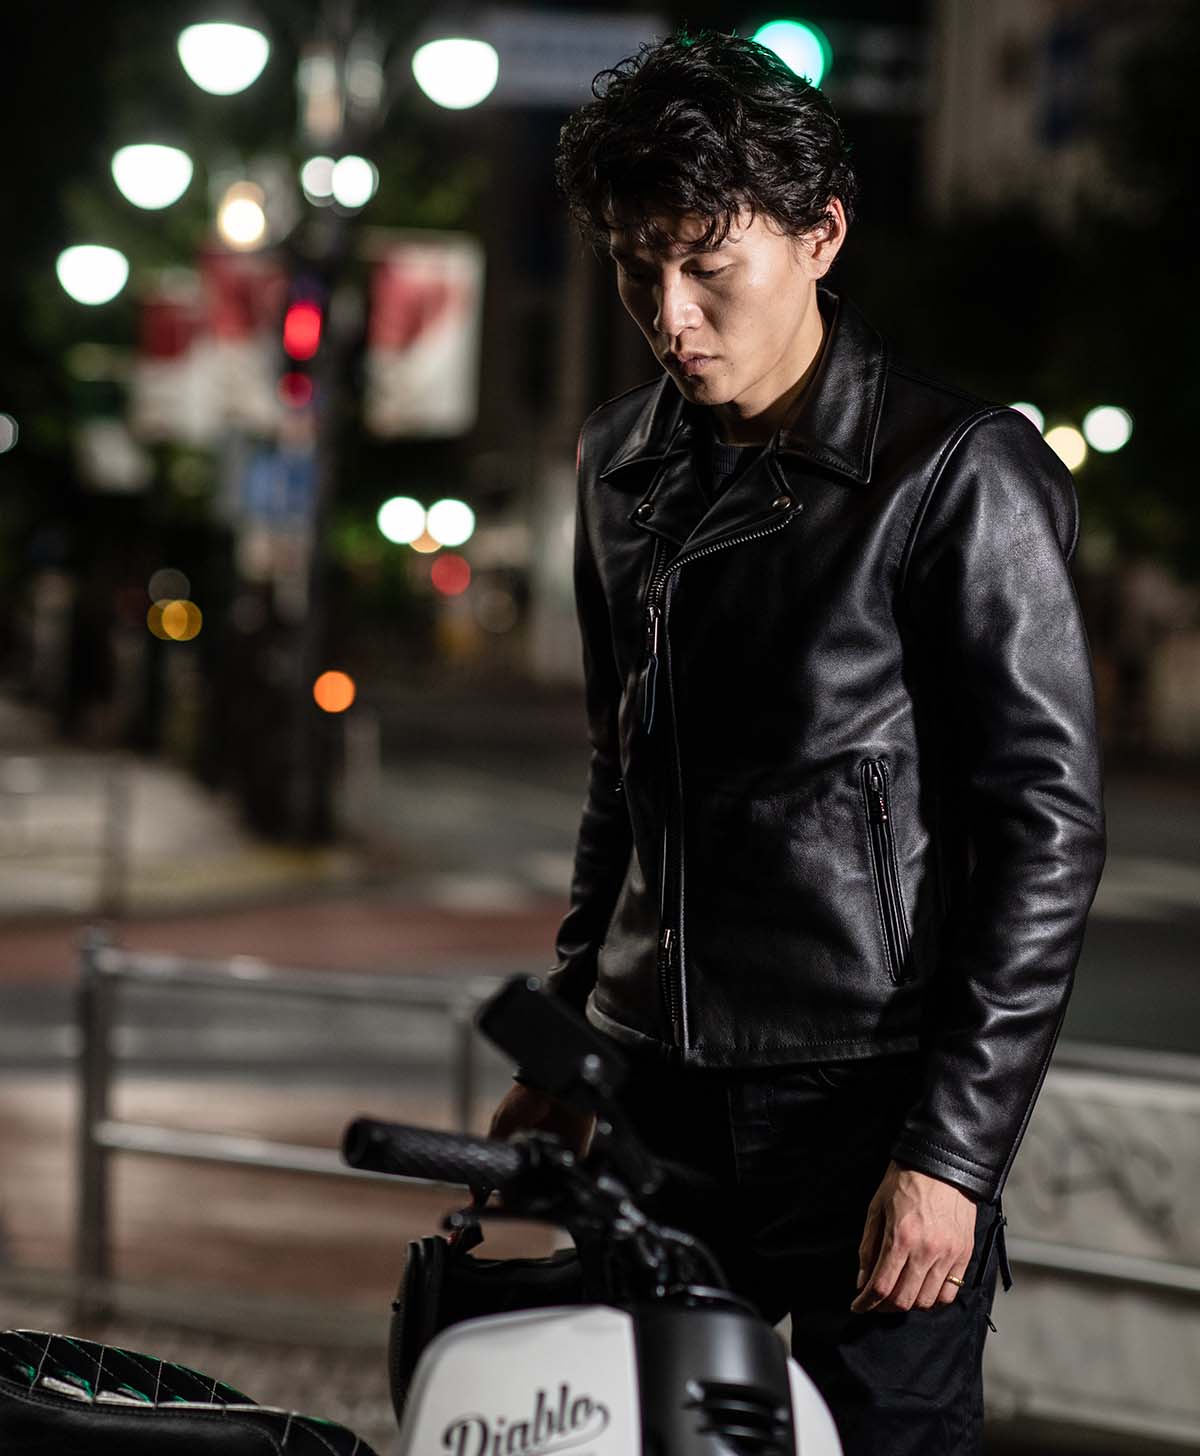 Leather jacket tight single leather jacket | Kadoya official 